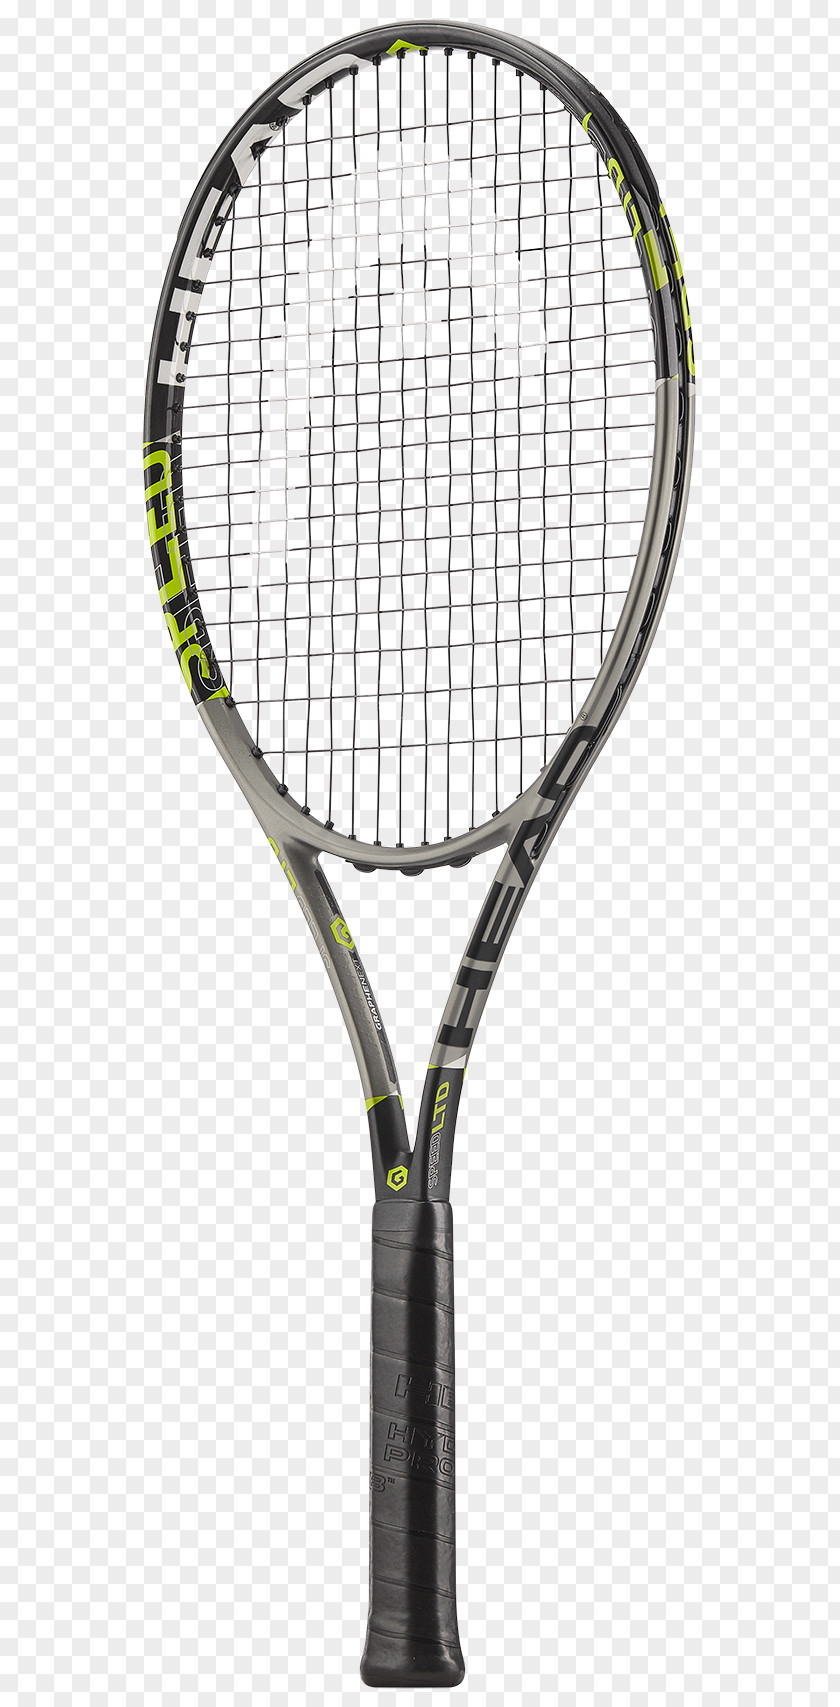 Rakieta Tenisowa Racket Head Graphene Tennis PNG